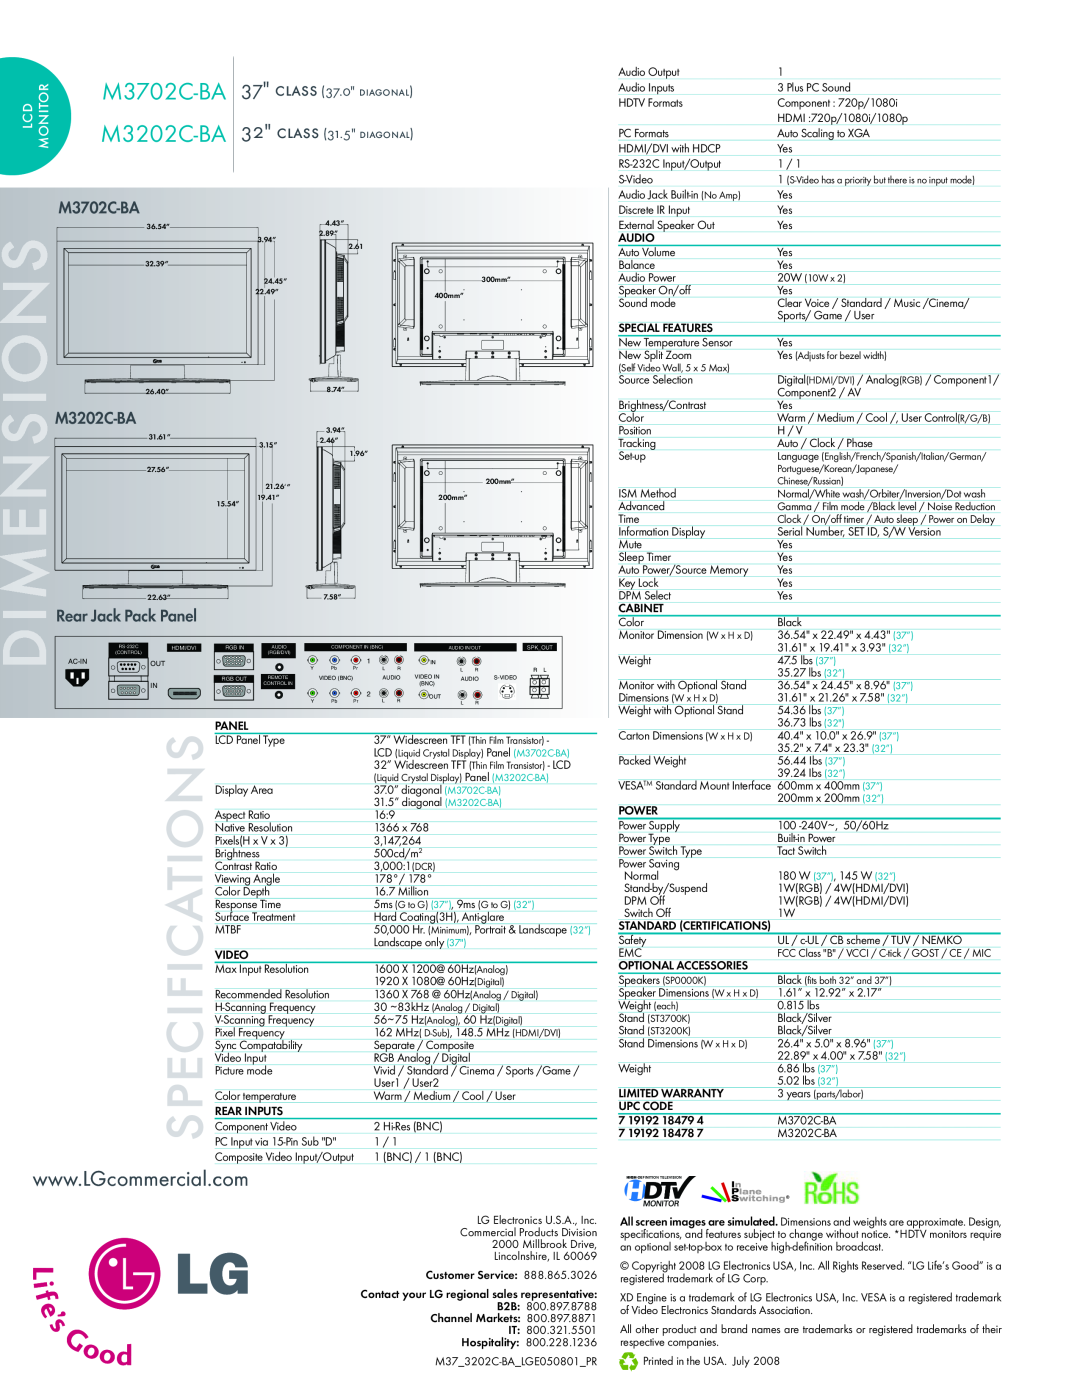 LG Electronics M3702C-BA monitor, class 37.0 diagonal, class 31.5 diagonal, specifications, M3202C-BA, Rear Jack PackPanel 